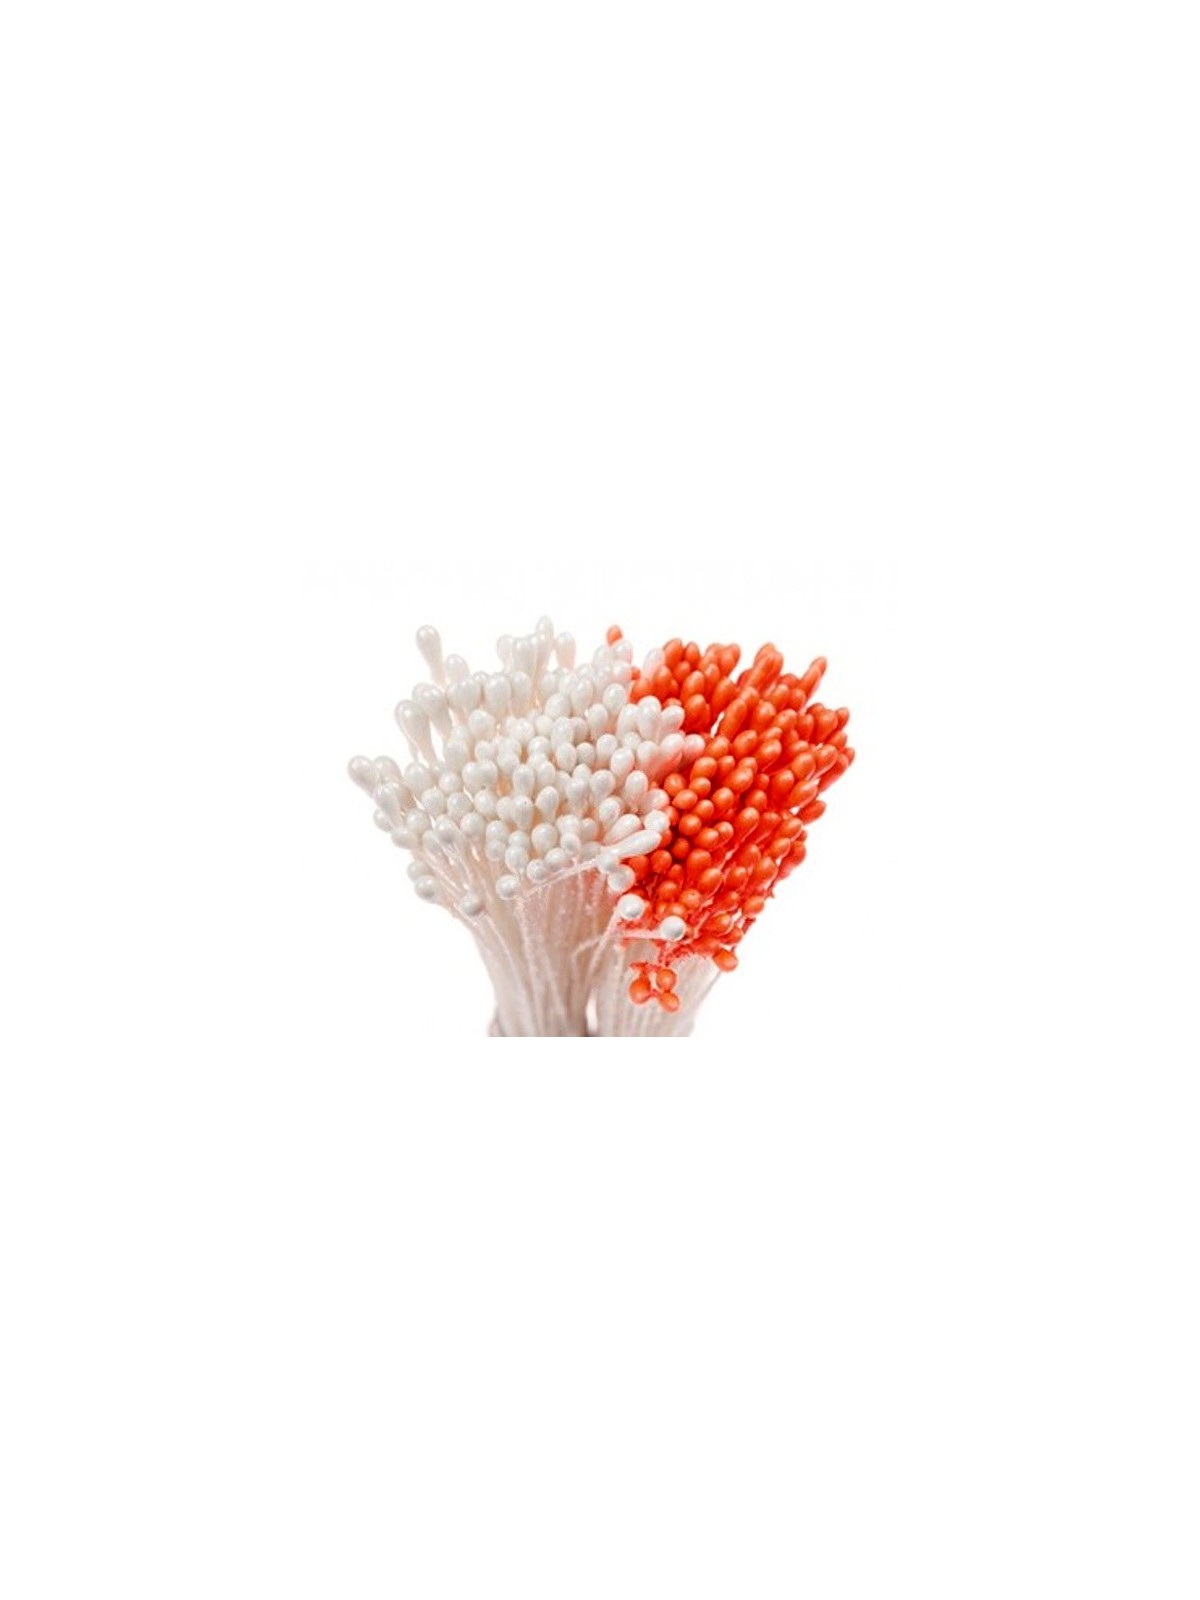 Decora Flower Stamen  - medium - pearl white / matt orange  288pcs